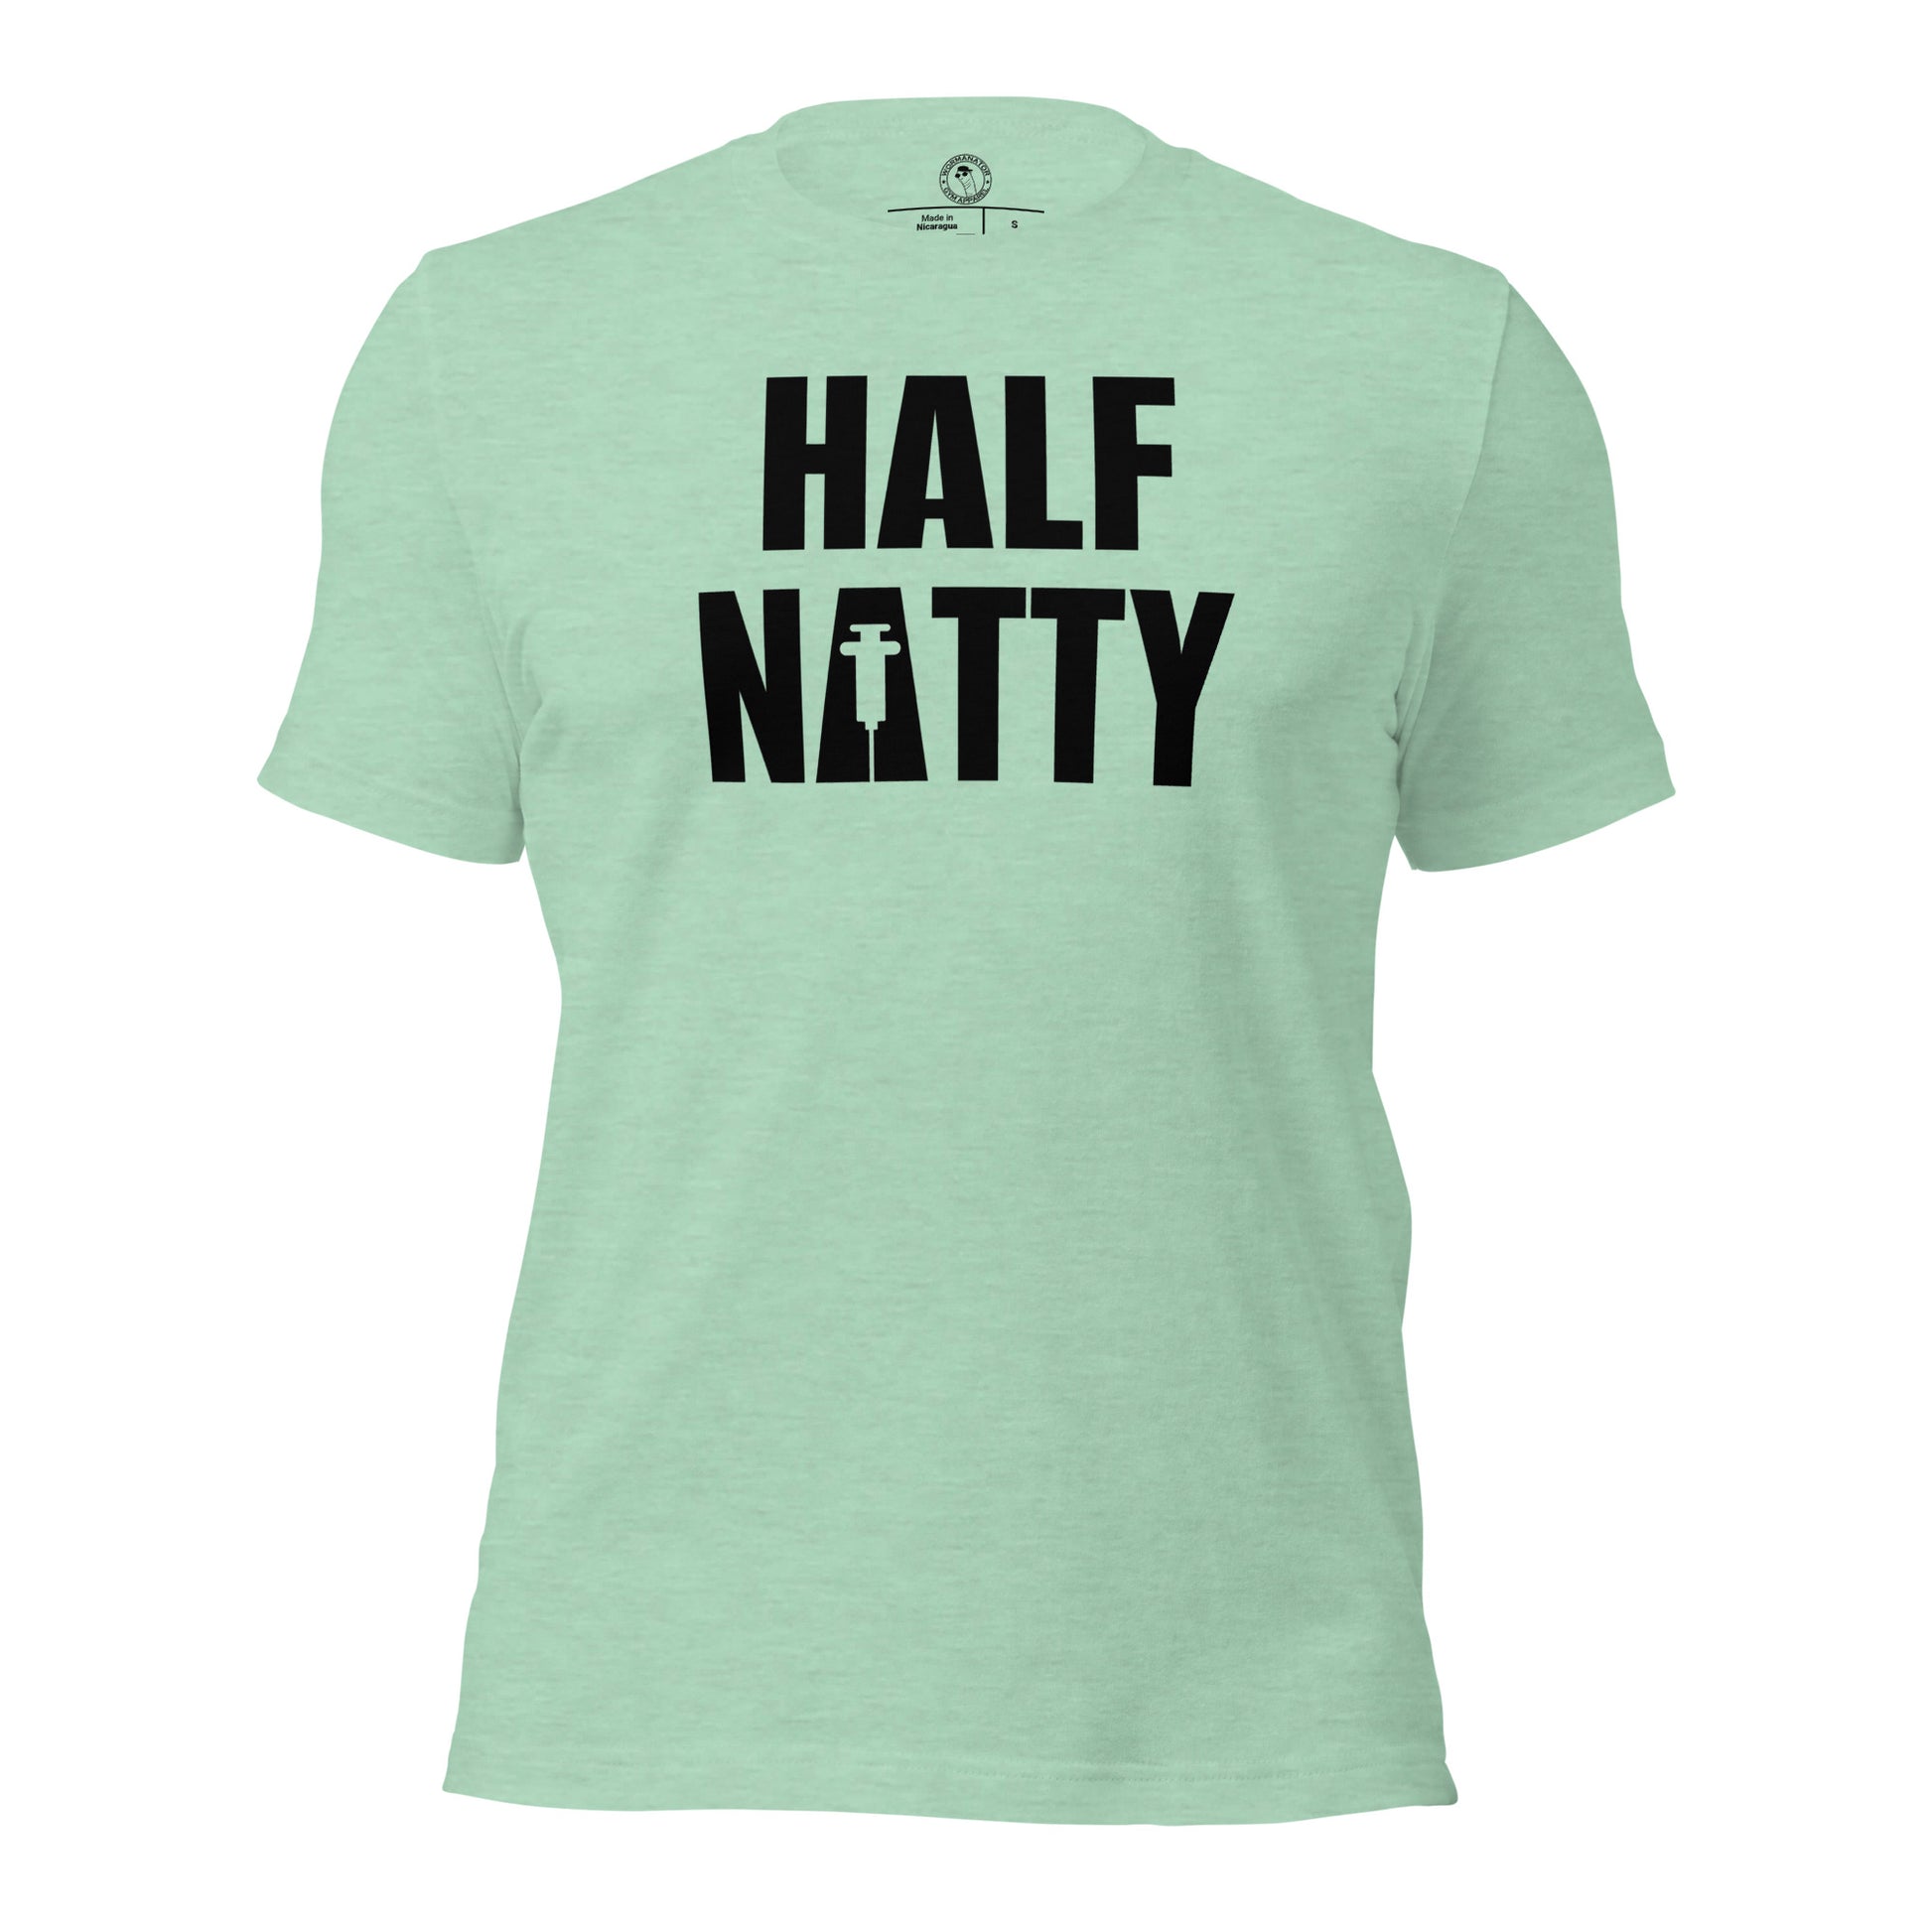 Half Natty T-Shirt in Heather Prism Mint